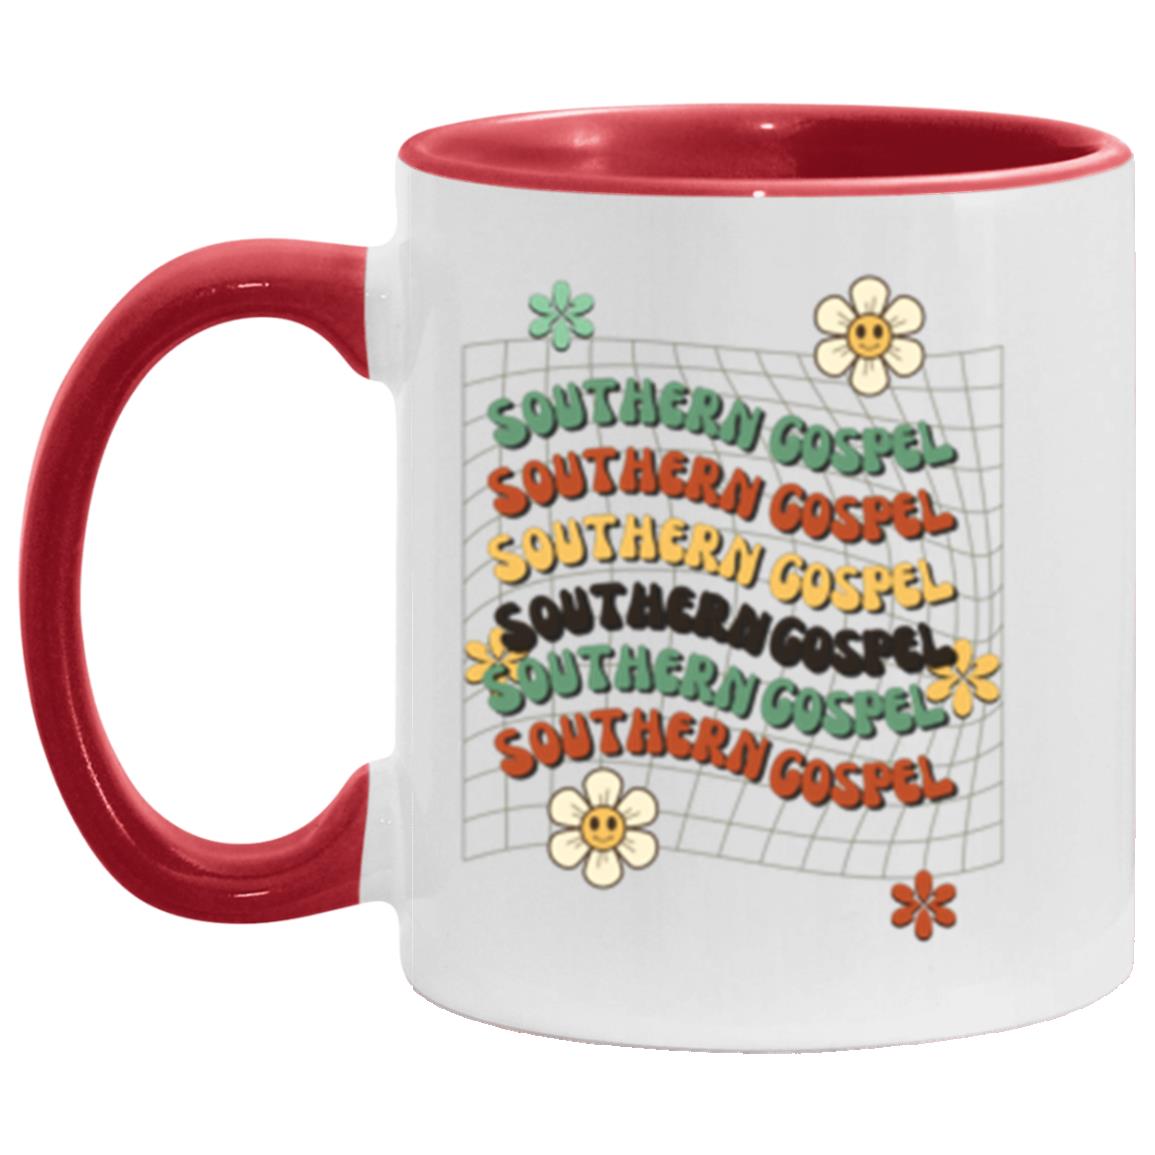 Southern Gospel - Southern Gospel Coffee mug